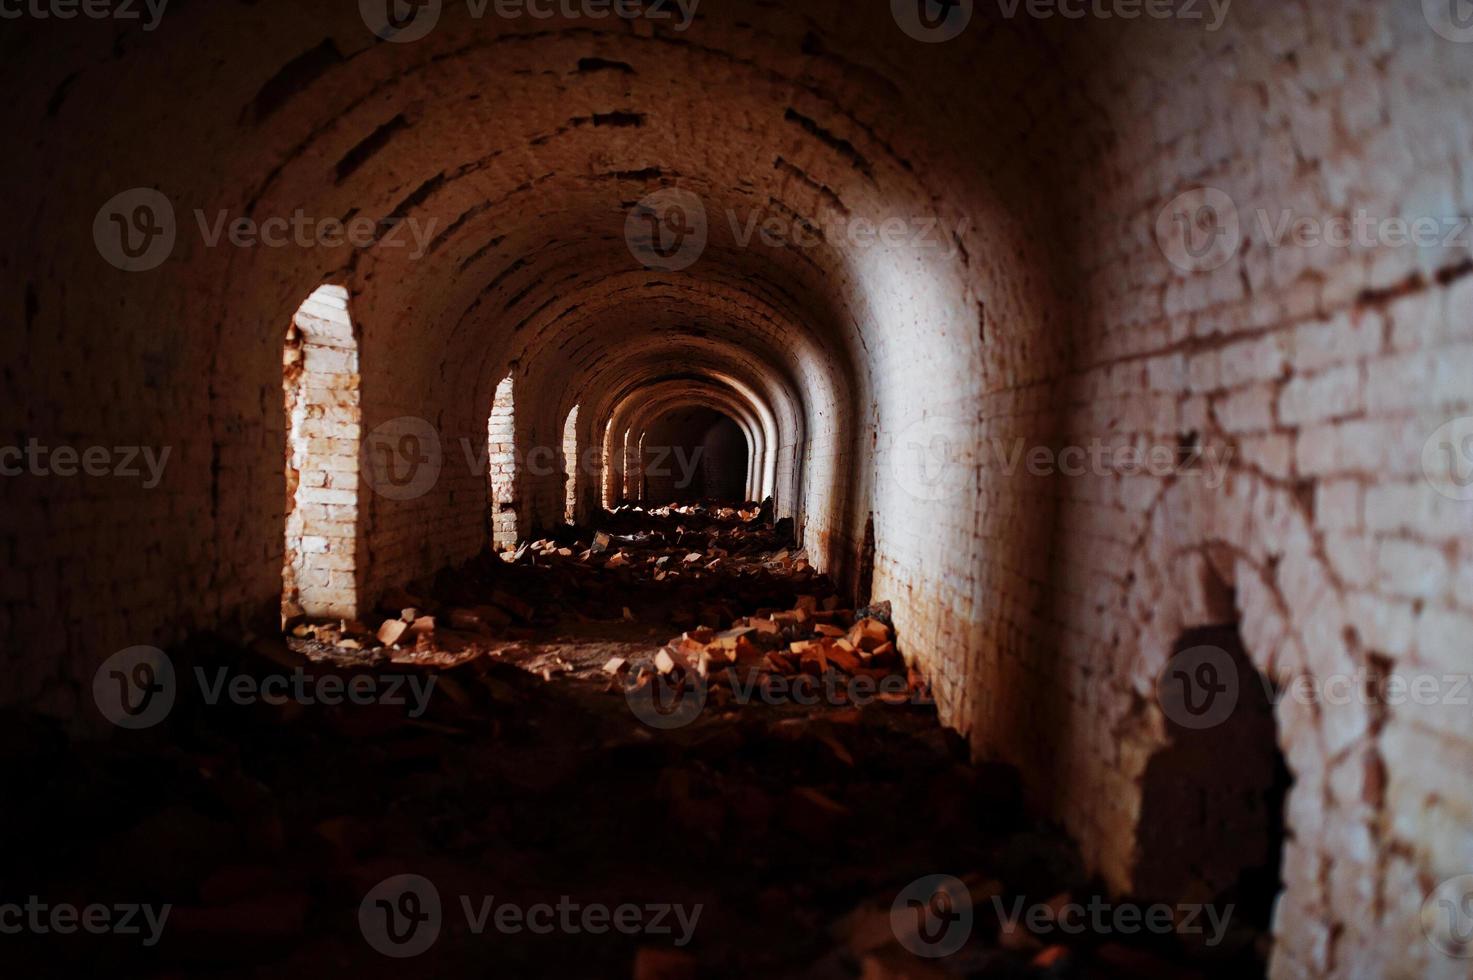 túnel de arco de tijolo assustador no escuro e um pouco de luz. foto